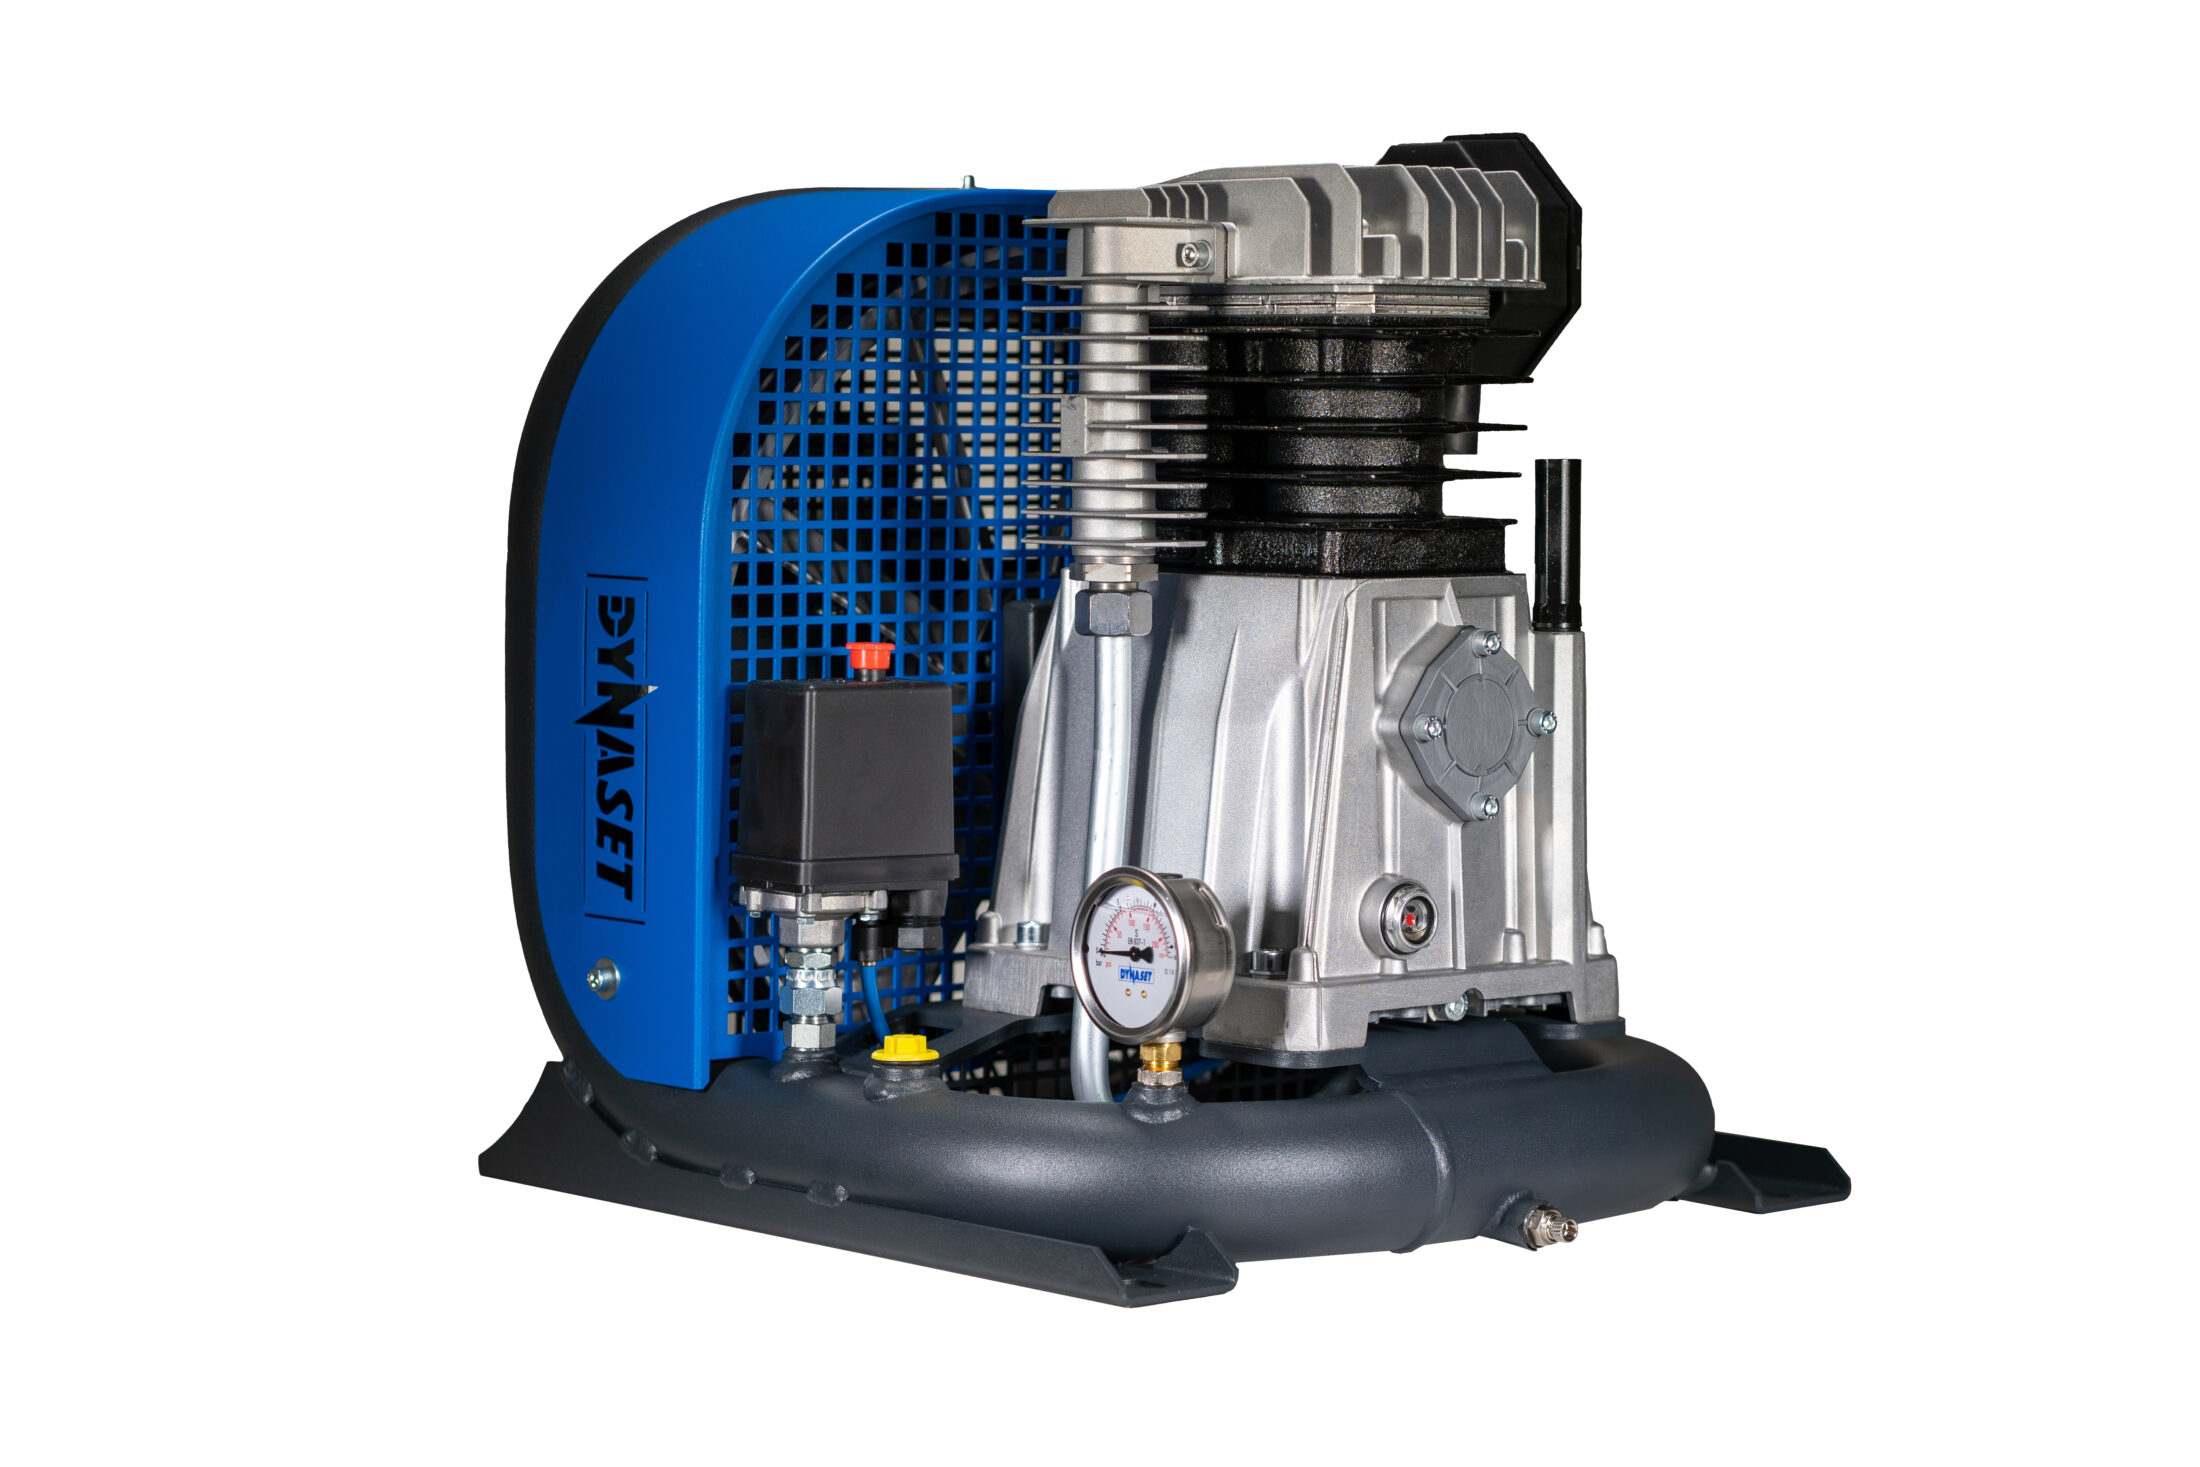 Blue Air HK450 Hydraulic Piston Compressor print.jpg 1